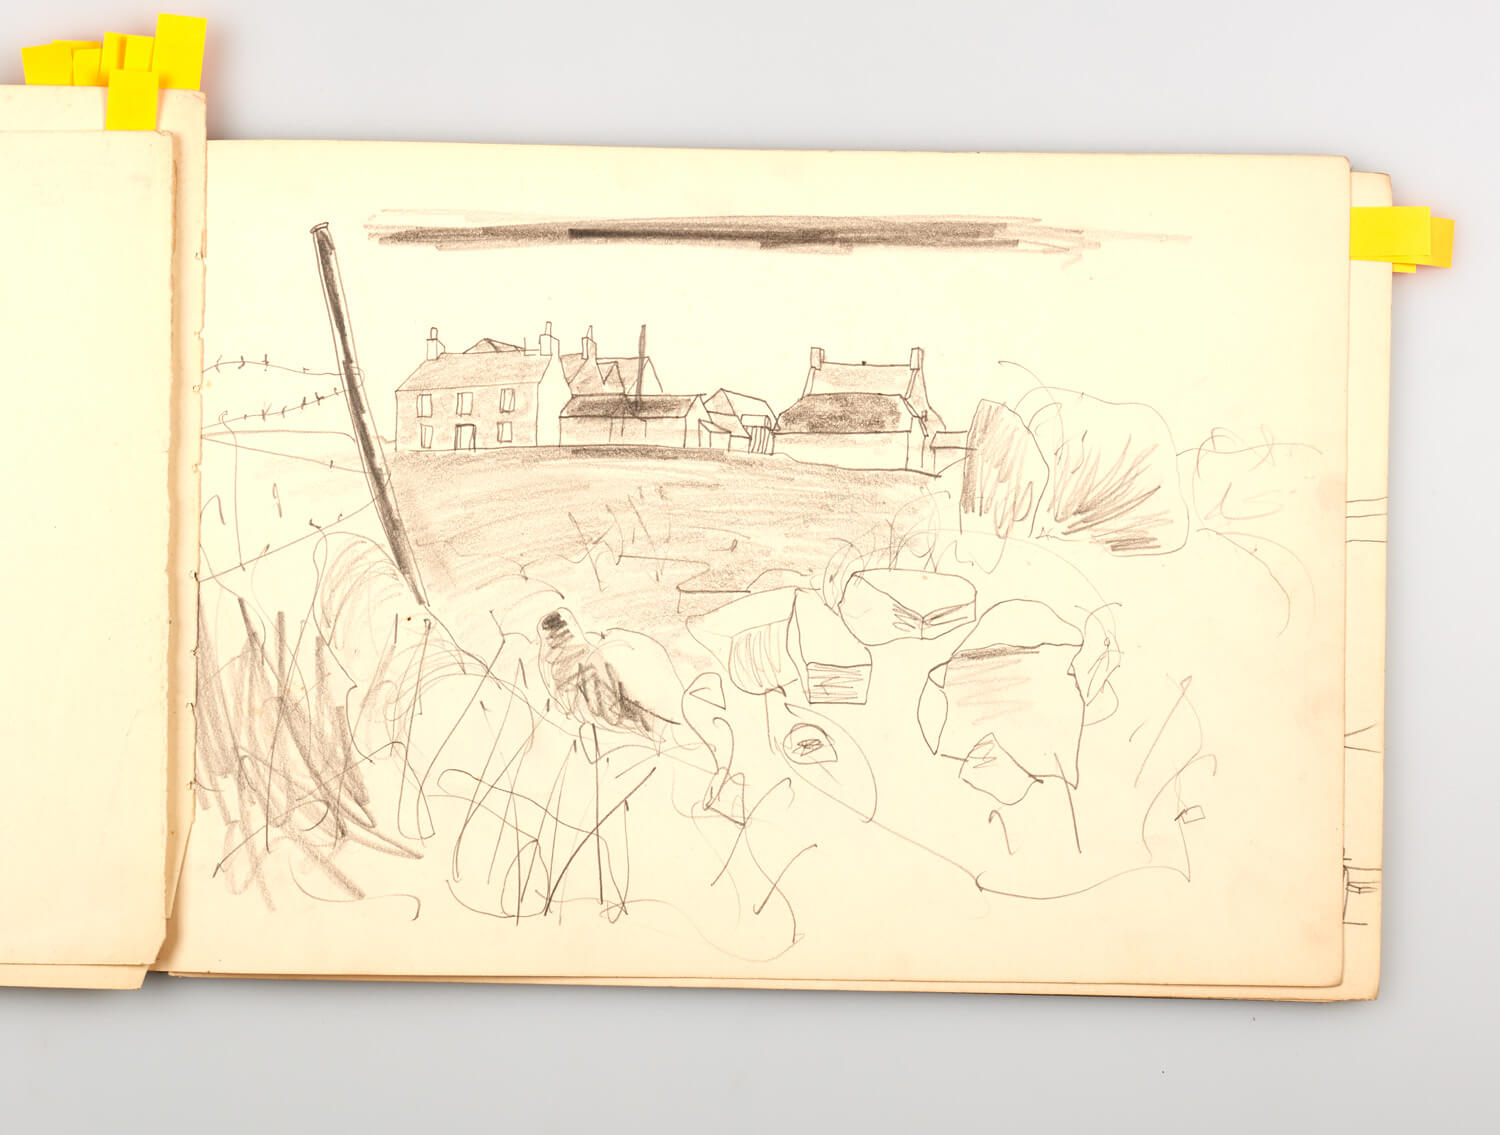 JB283 - Cornish Sketch Book 1948 - 1948 - 25 x 36.5 cm - Pencil